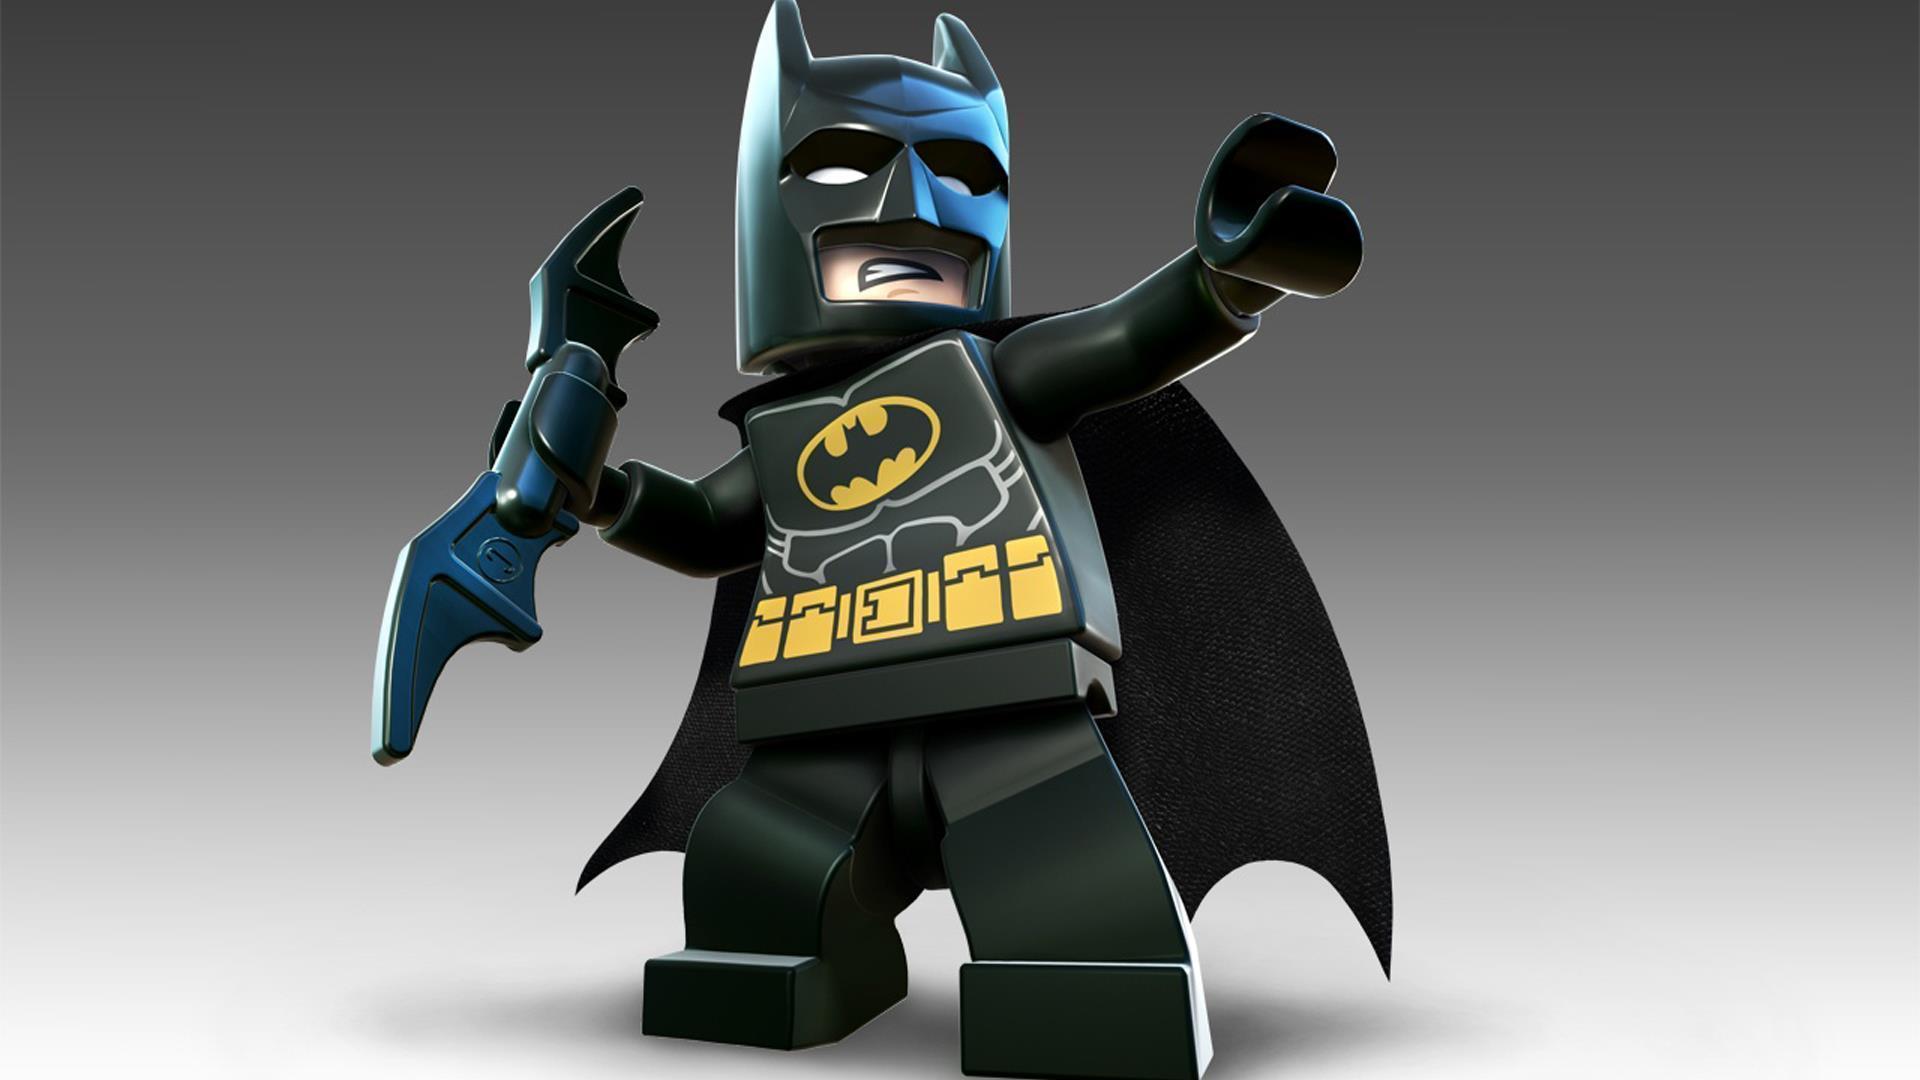 LEGO Batman Wallpaper Free LEGO Batman Background